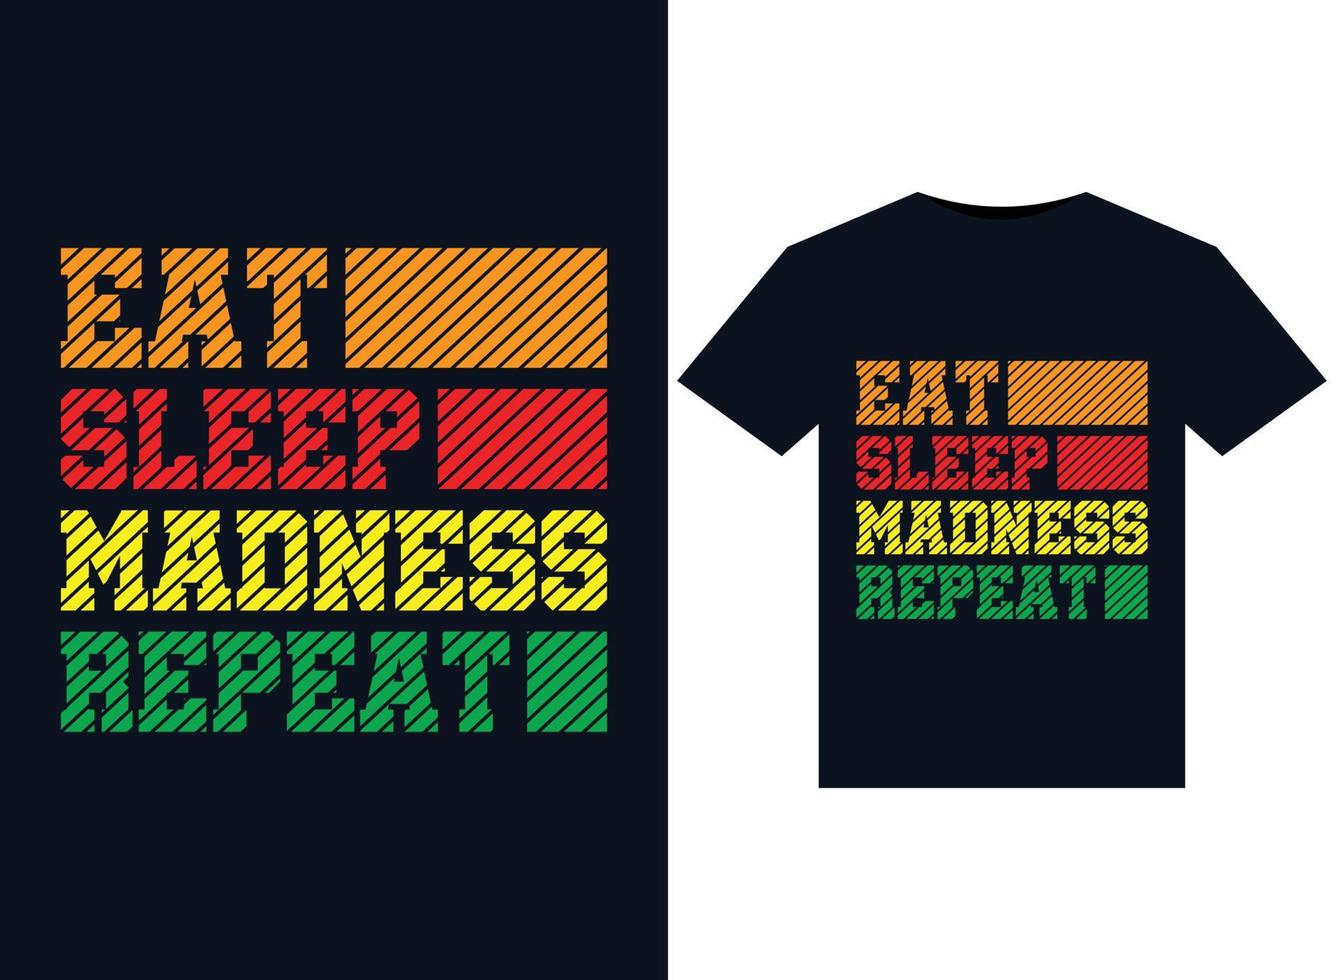 eat sleep madness Wiederholungsillustrationen für druckfertige T-Shirt-Designs vektor